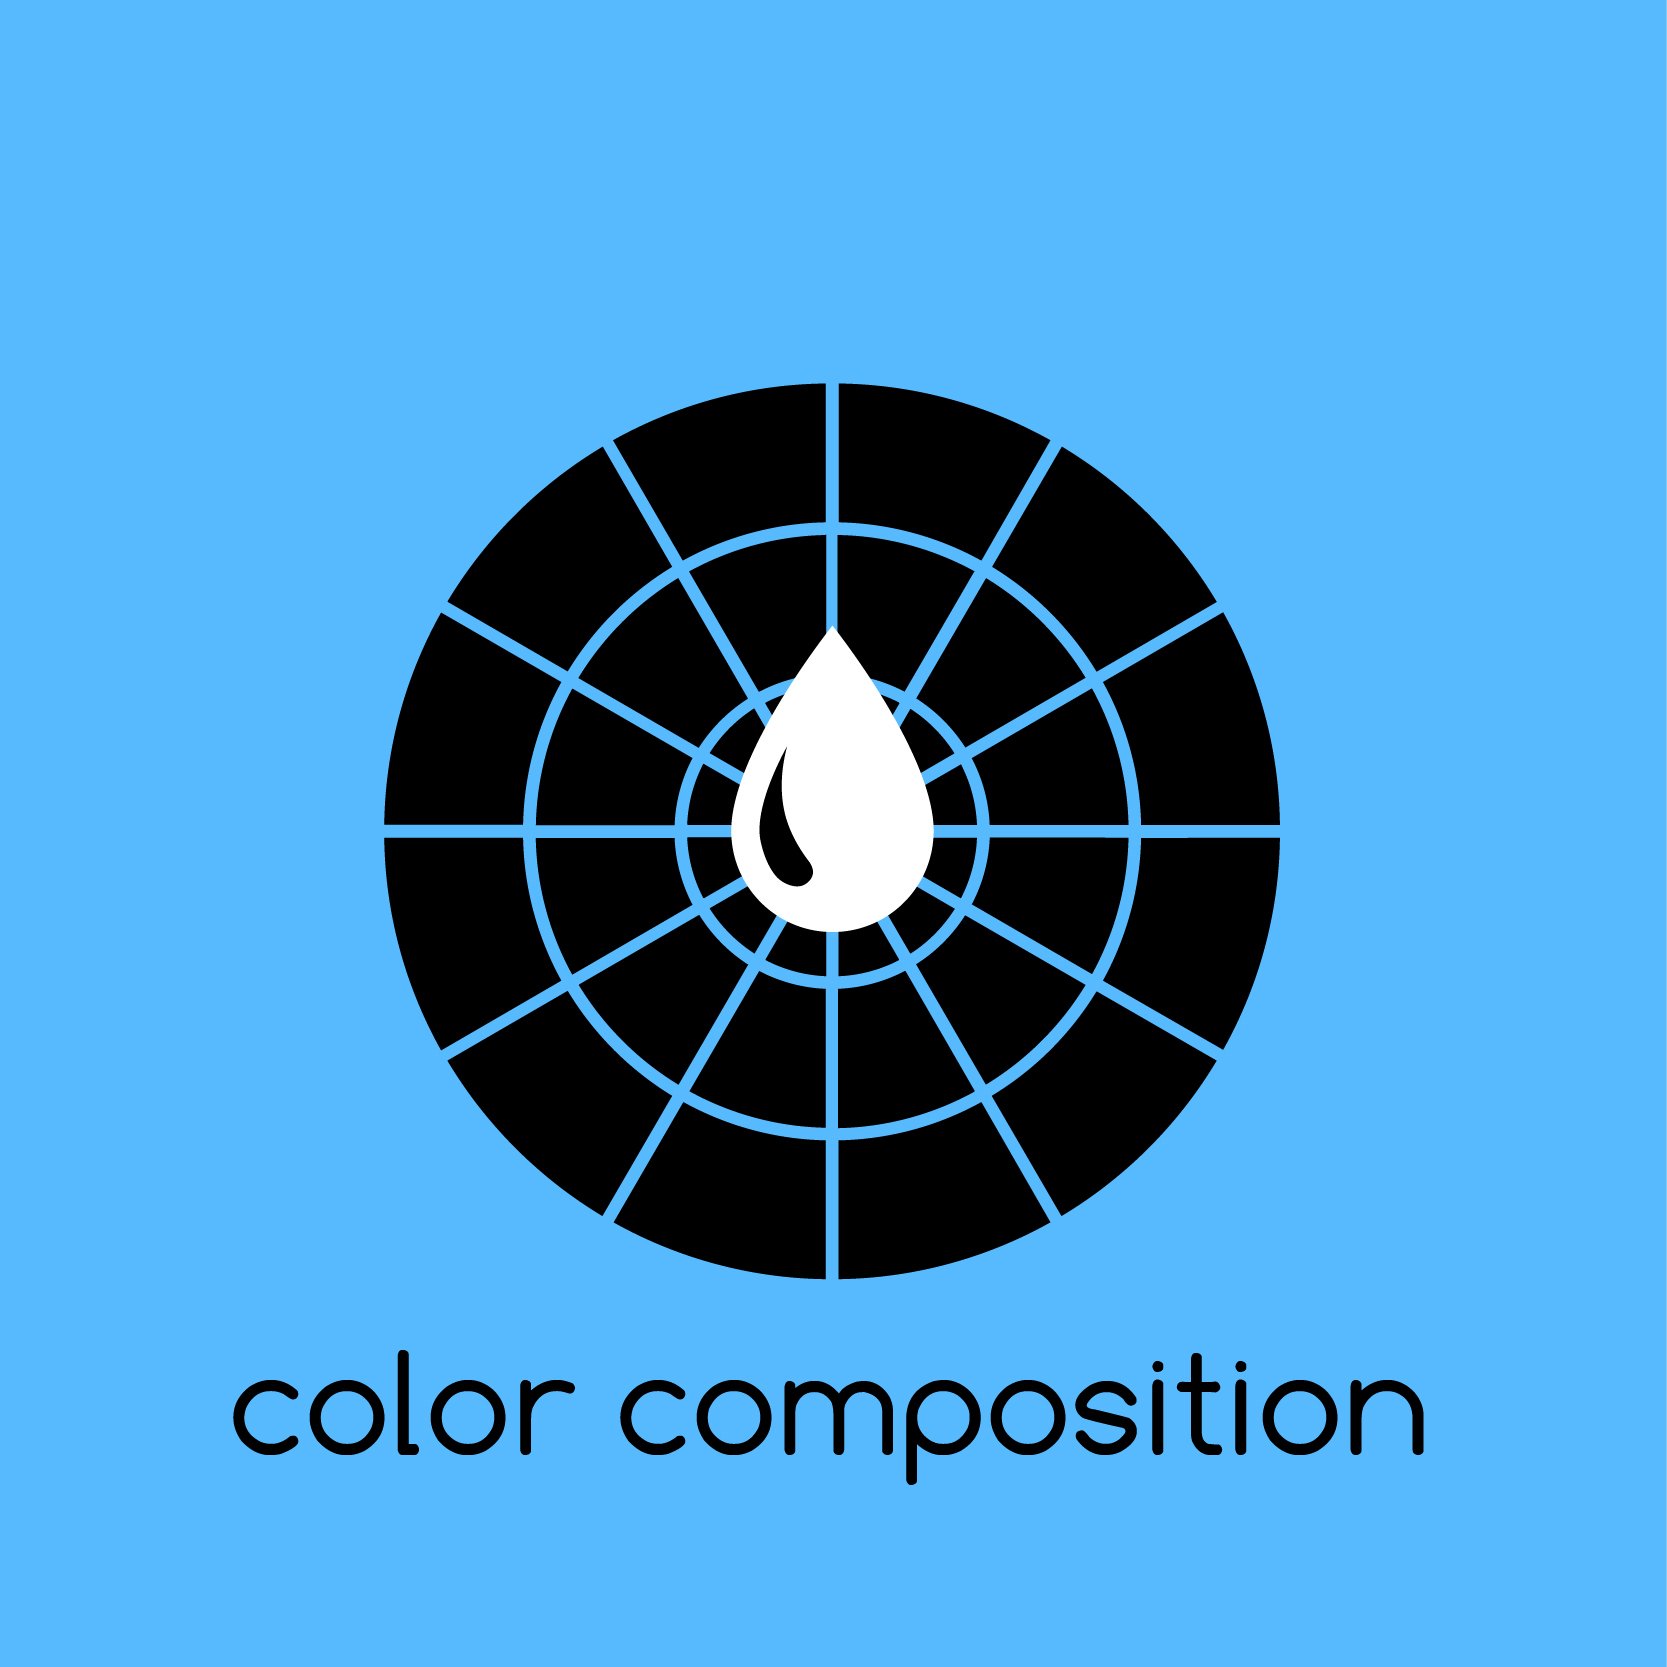 specialized service: color composition